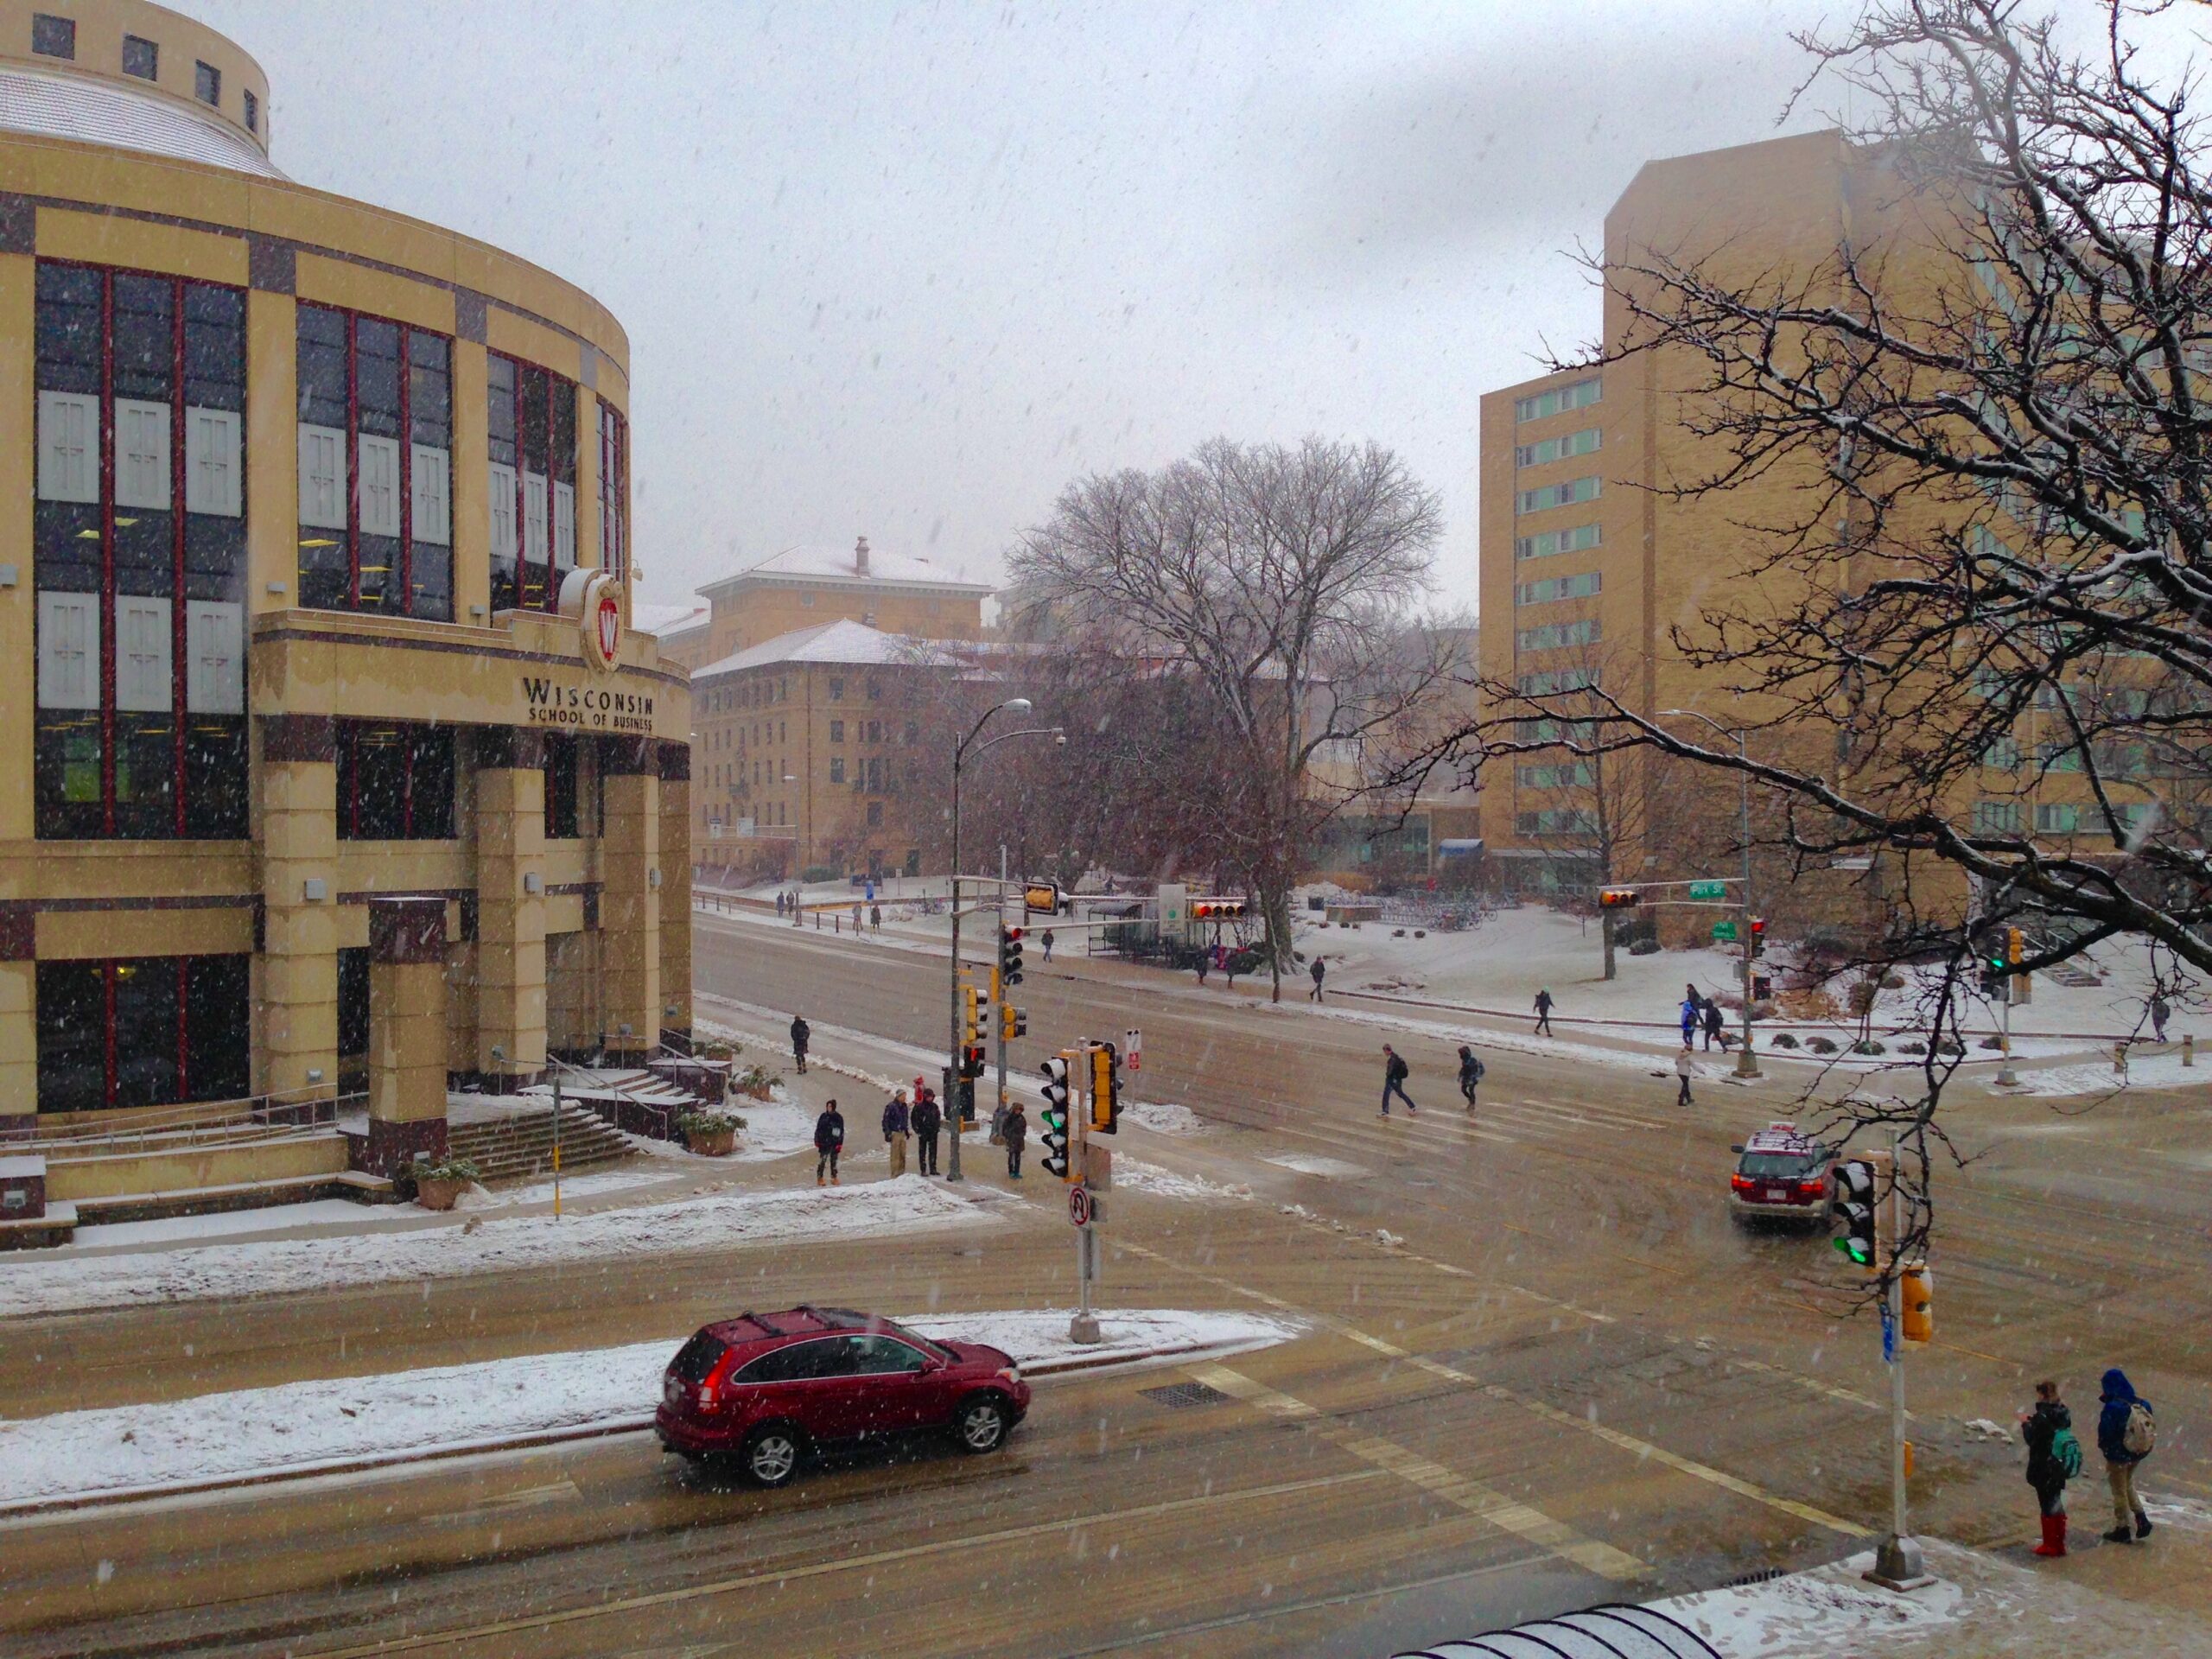 Snowstorm on the UW-Madison campus